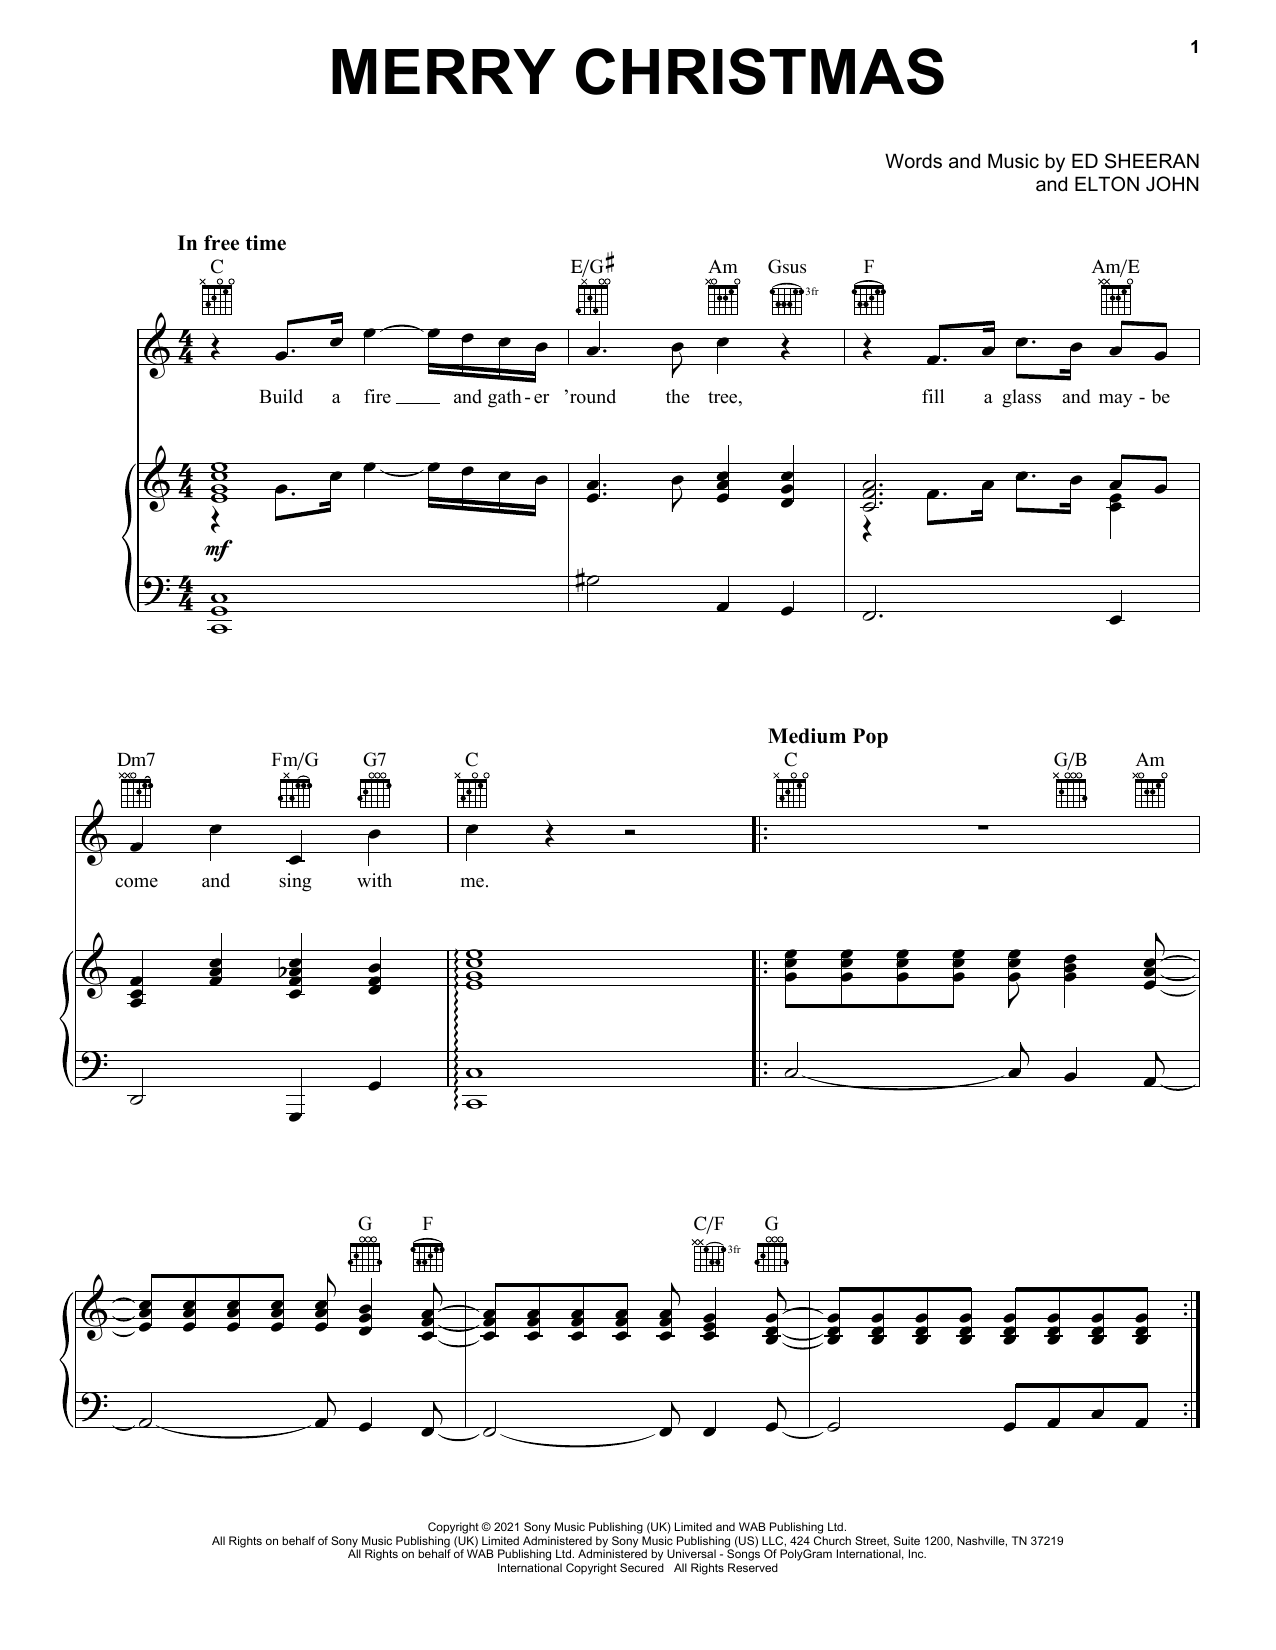 Ed Sheeran & Elton John Merry Christmas Sheet Music Notes & Chords for Piano, Vocal & Guitar Chords (Right-Hand Melody) - Download or Print PDF